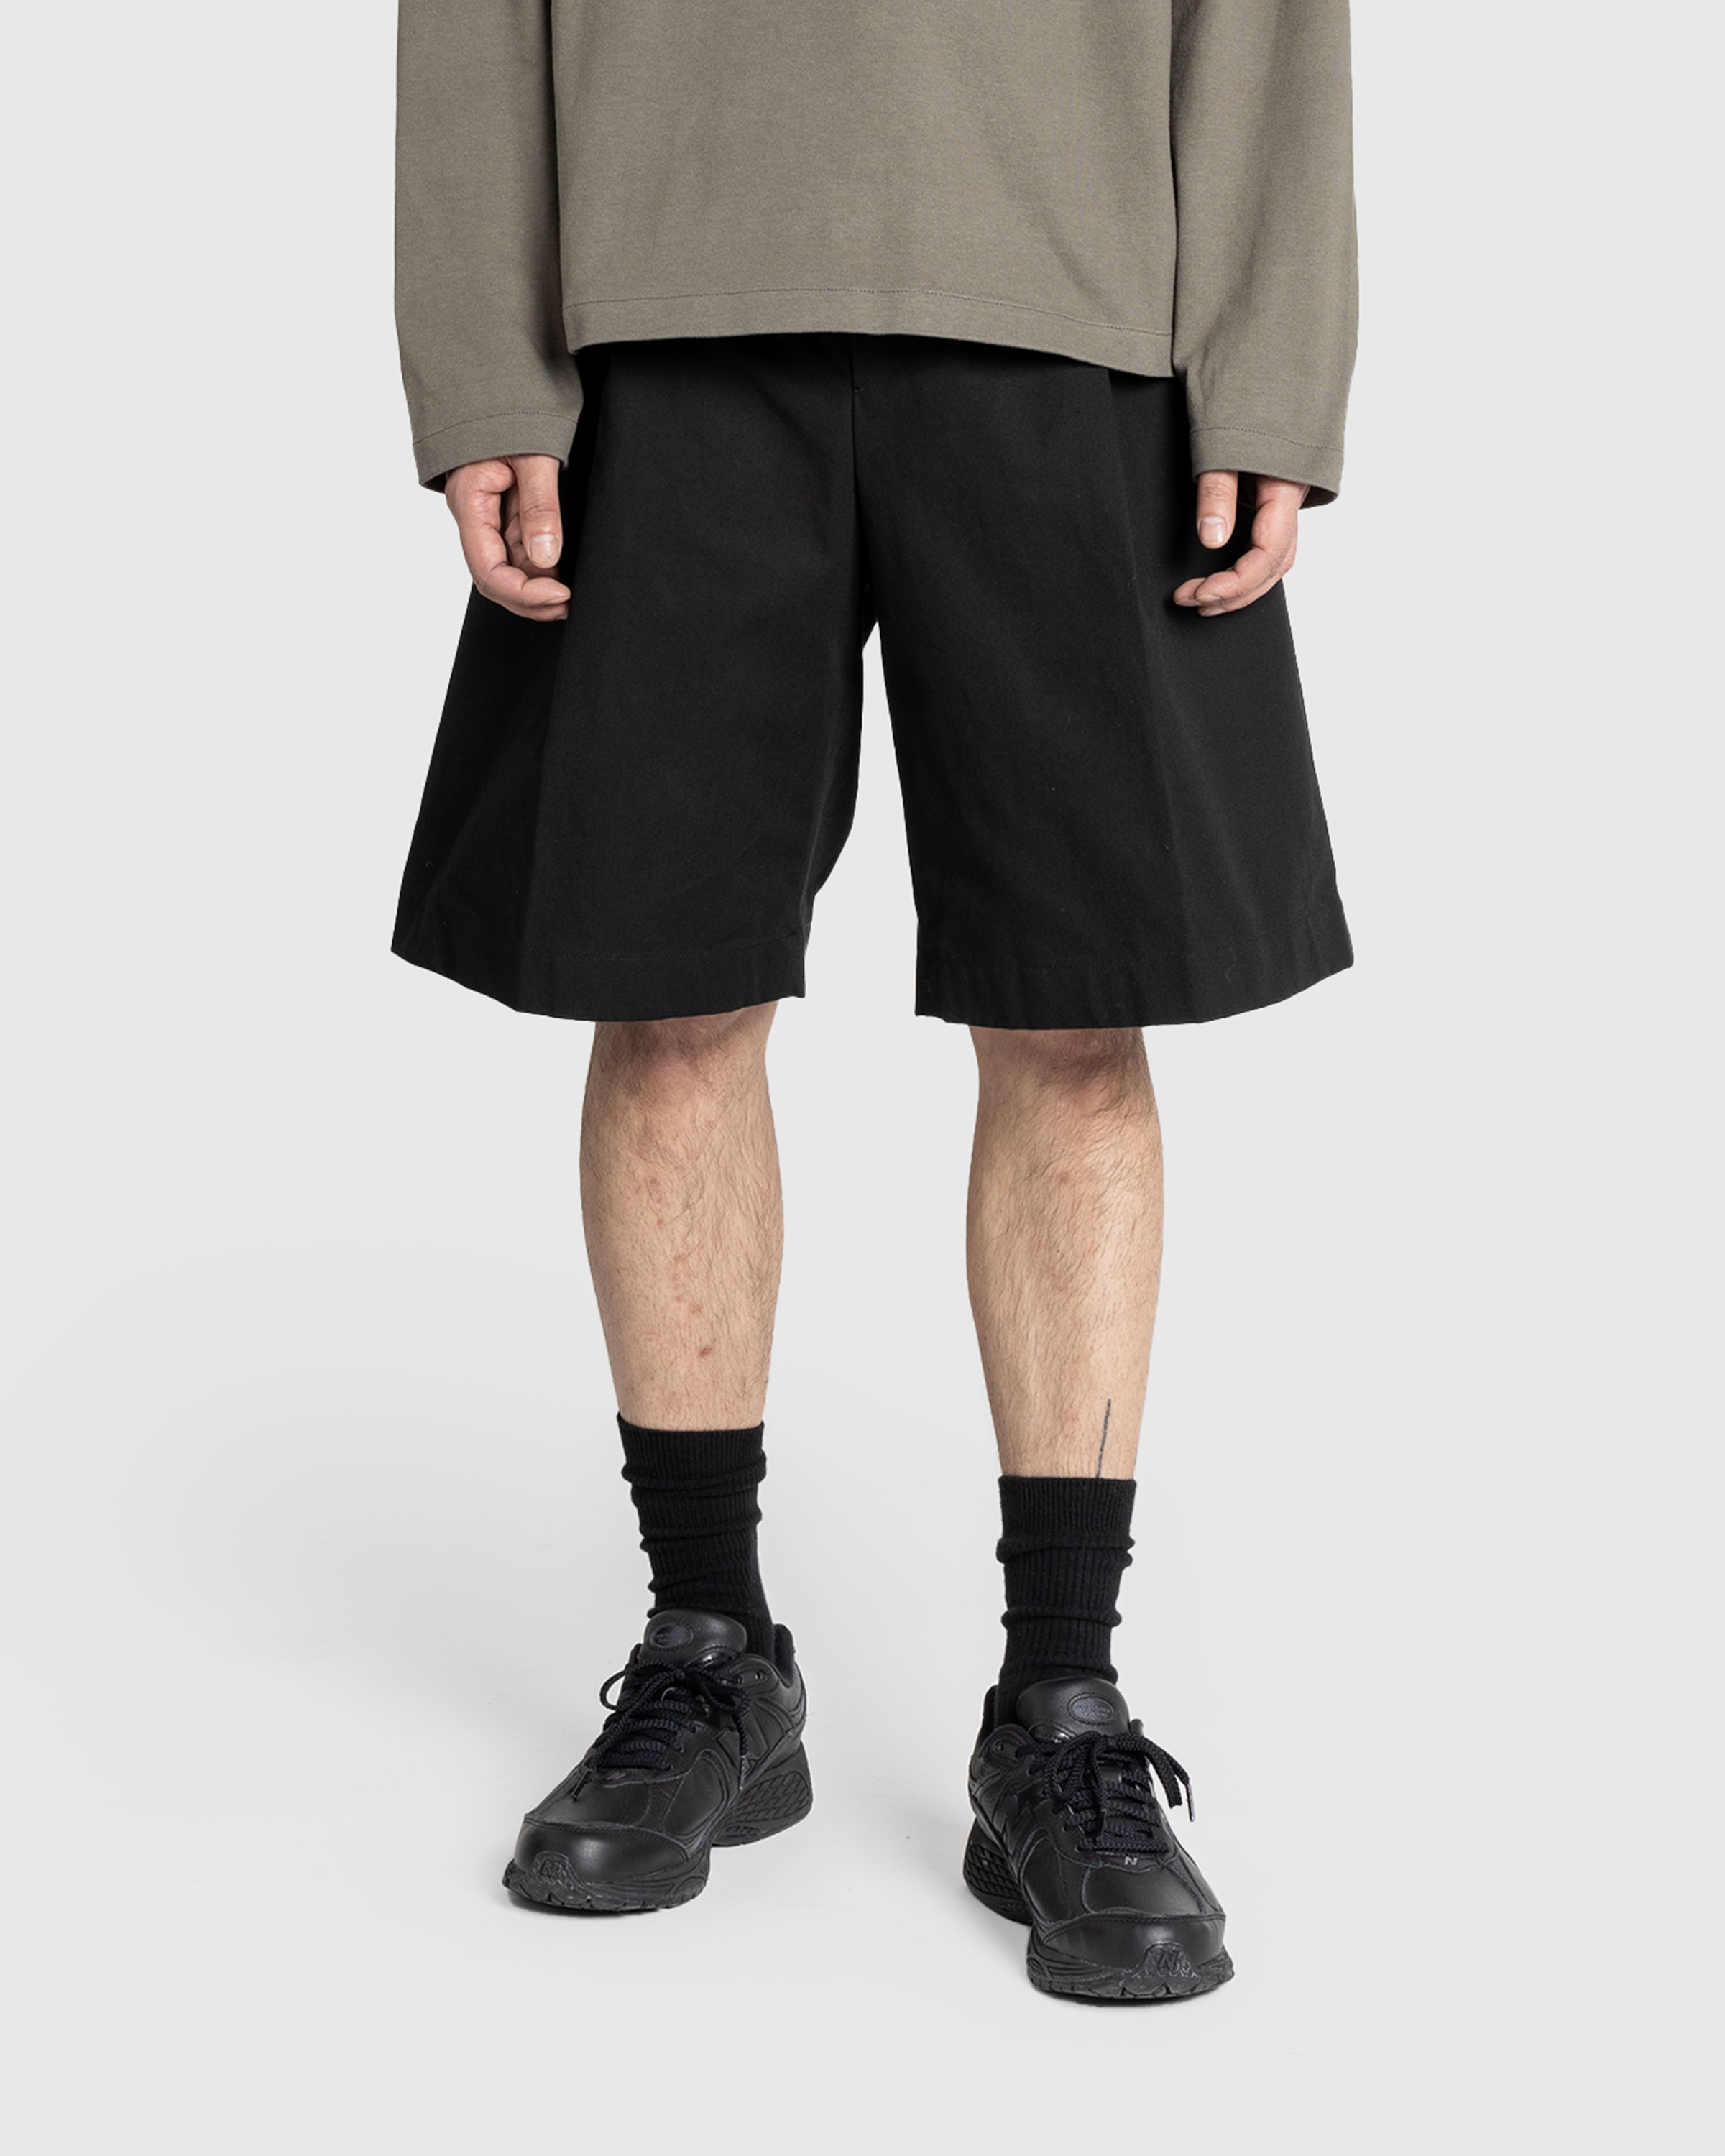 Jil Sander – Trouser 105 Shorts Black - Bermuda Cuts - Black - Image 2